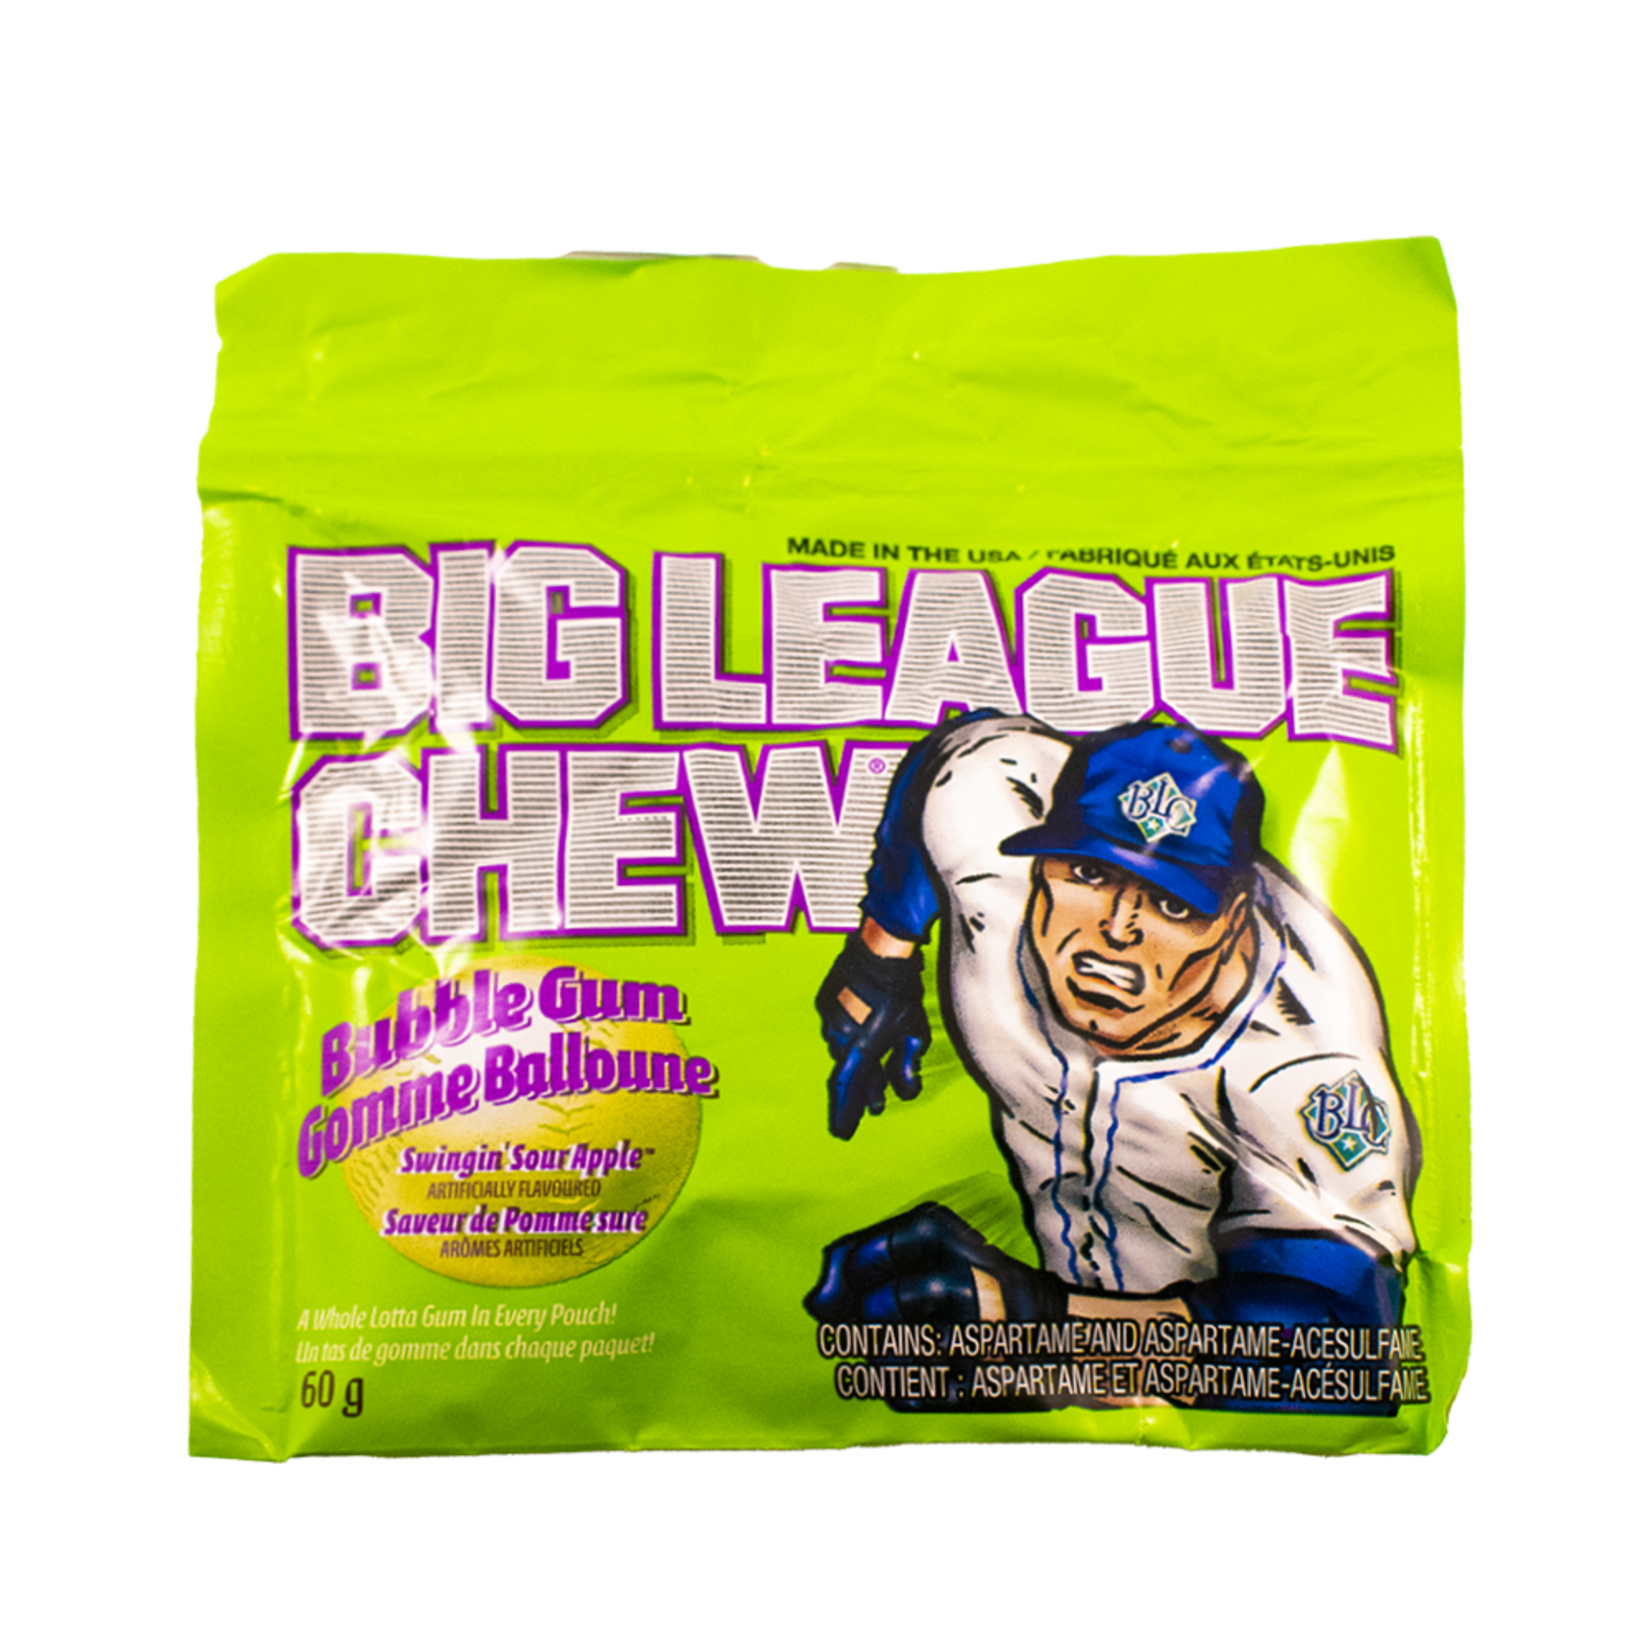 Big League Chew Big League Chew Green Apple Gum